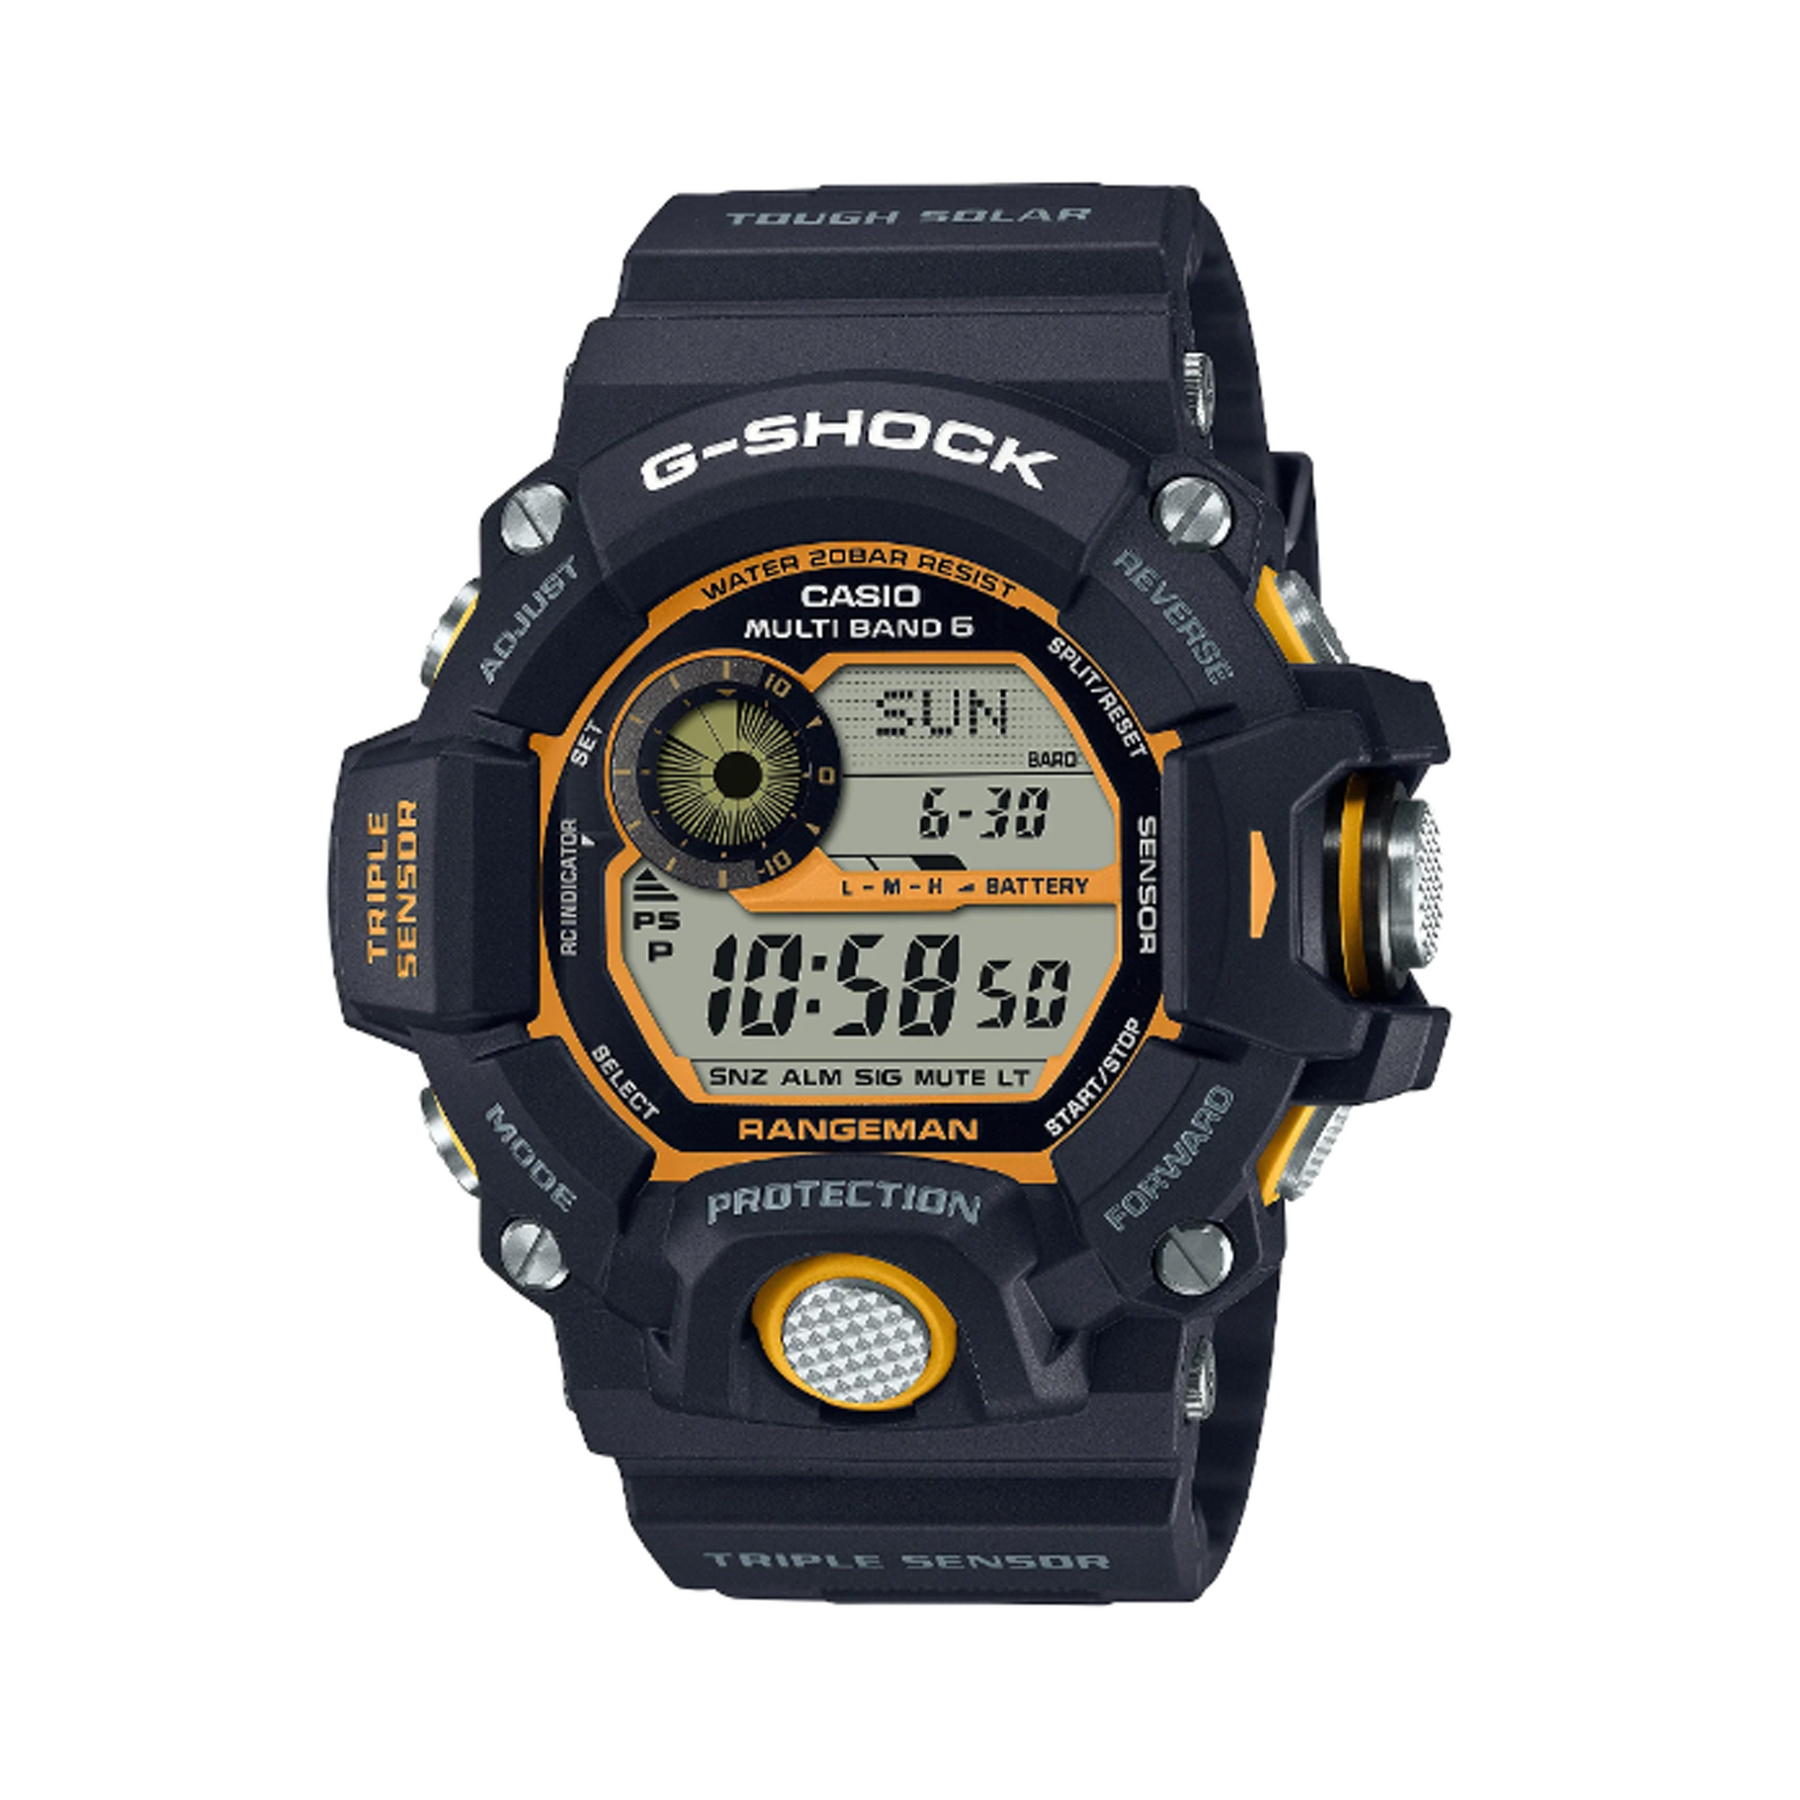 Casio G-SHOCK Men's Digital Watch GW9400Y-1D